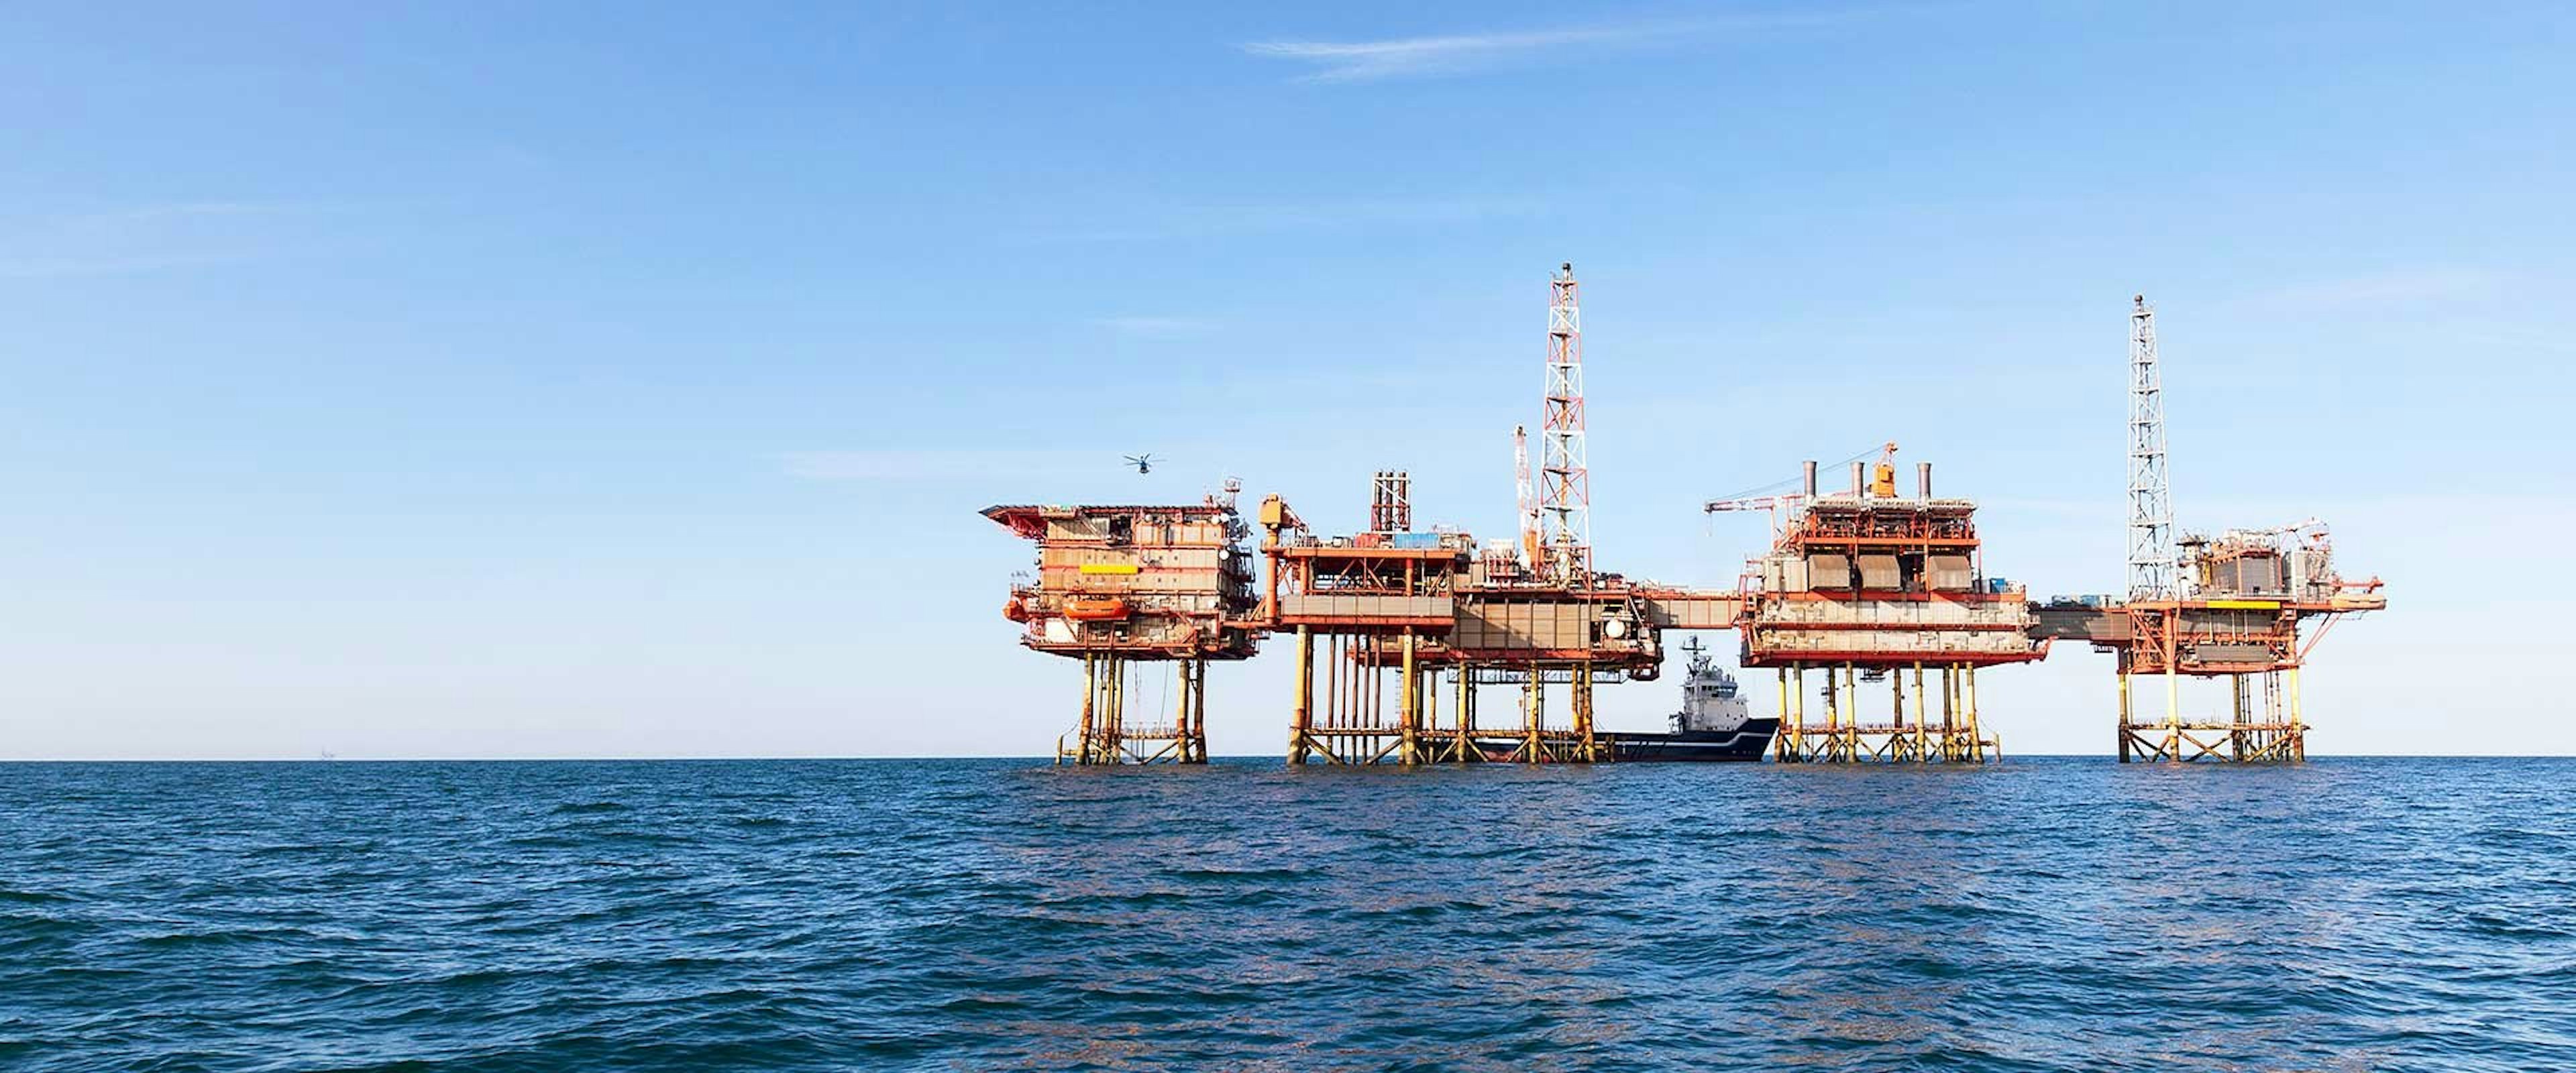 oil rig offshore australia